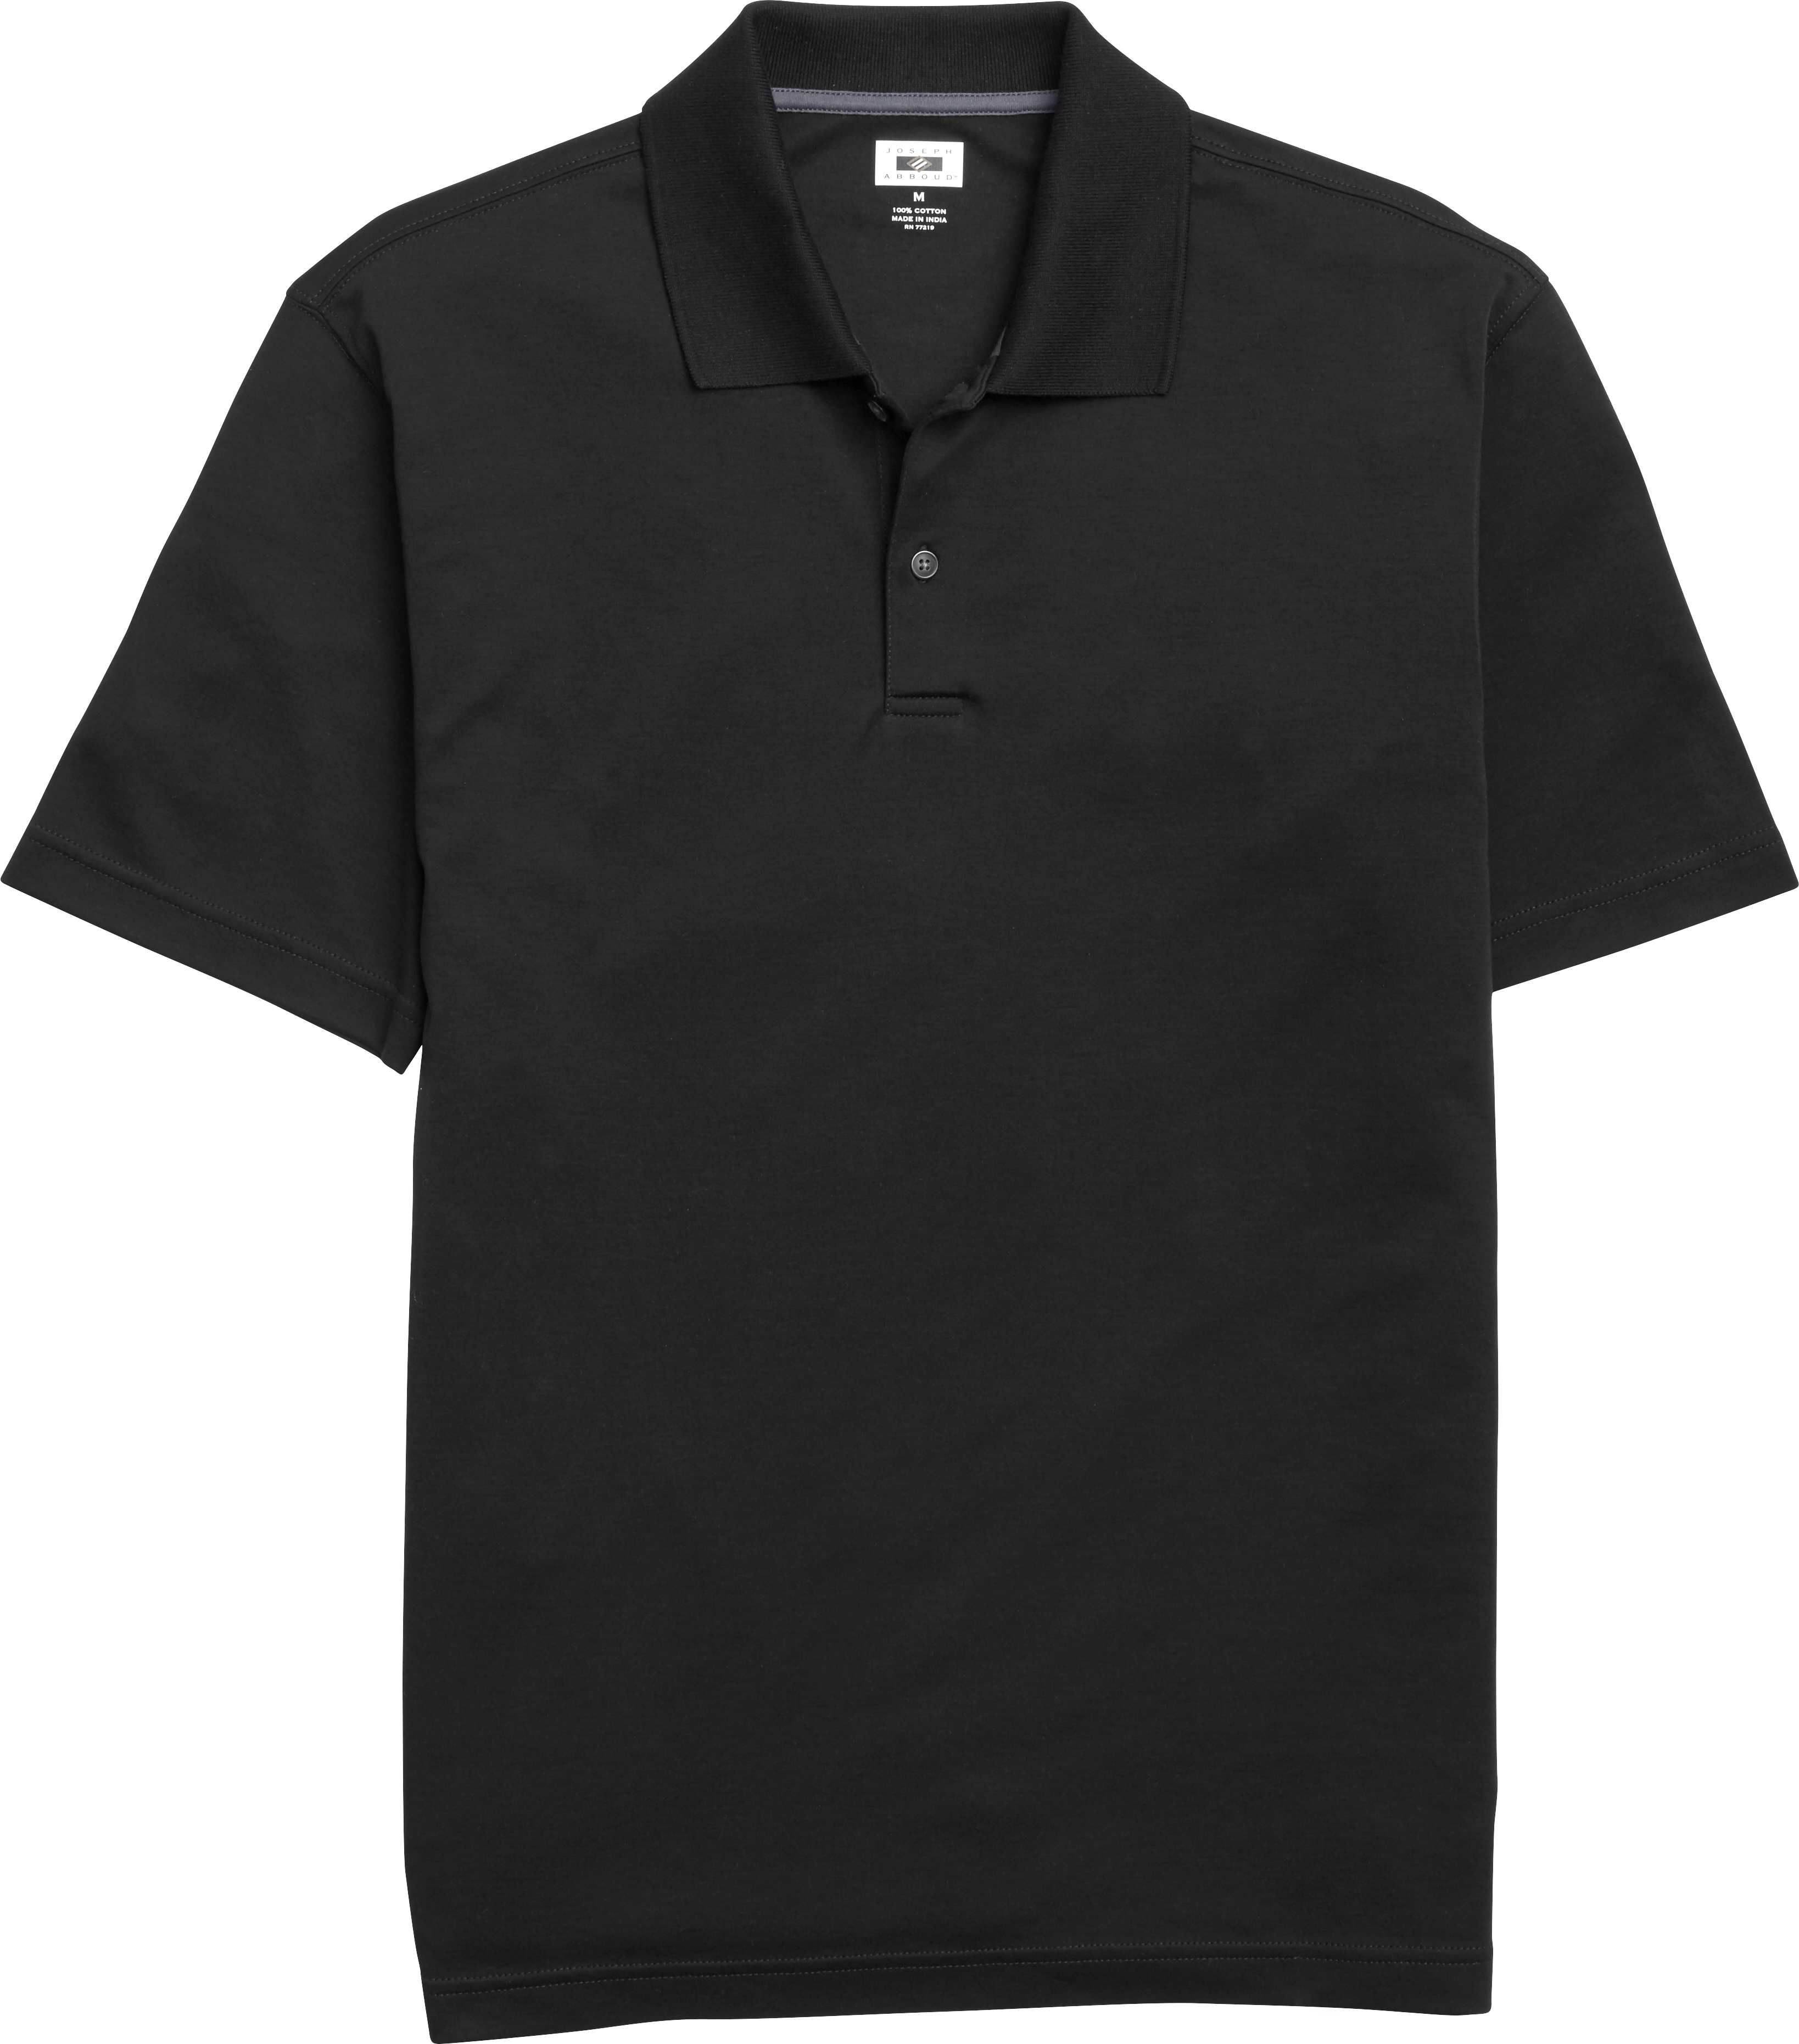 Joseph Abboud Black Pima Cotton Polo Shirt - Men's Golf Shirts | Men's ...